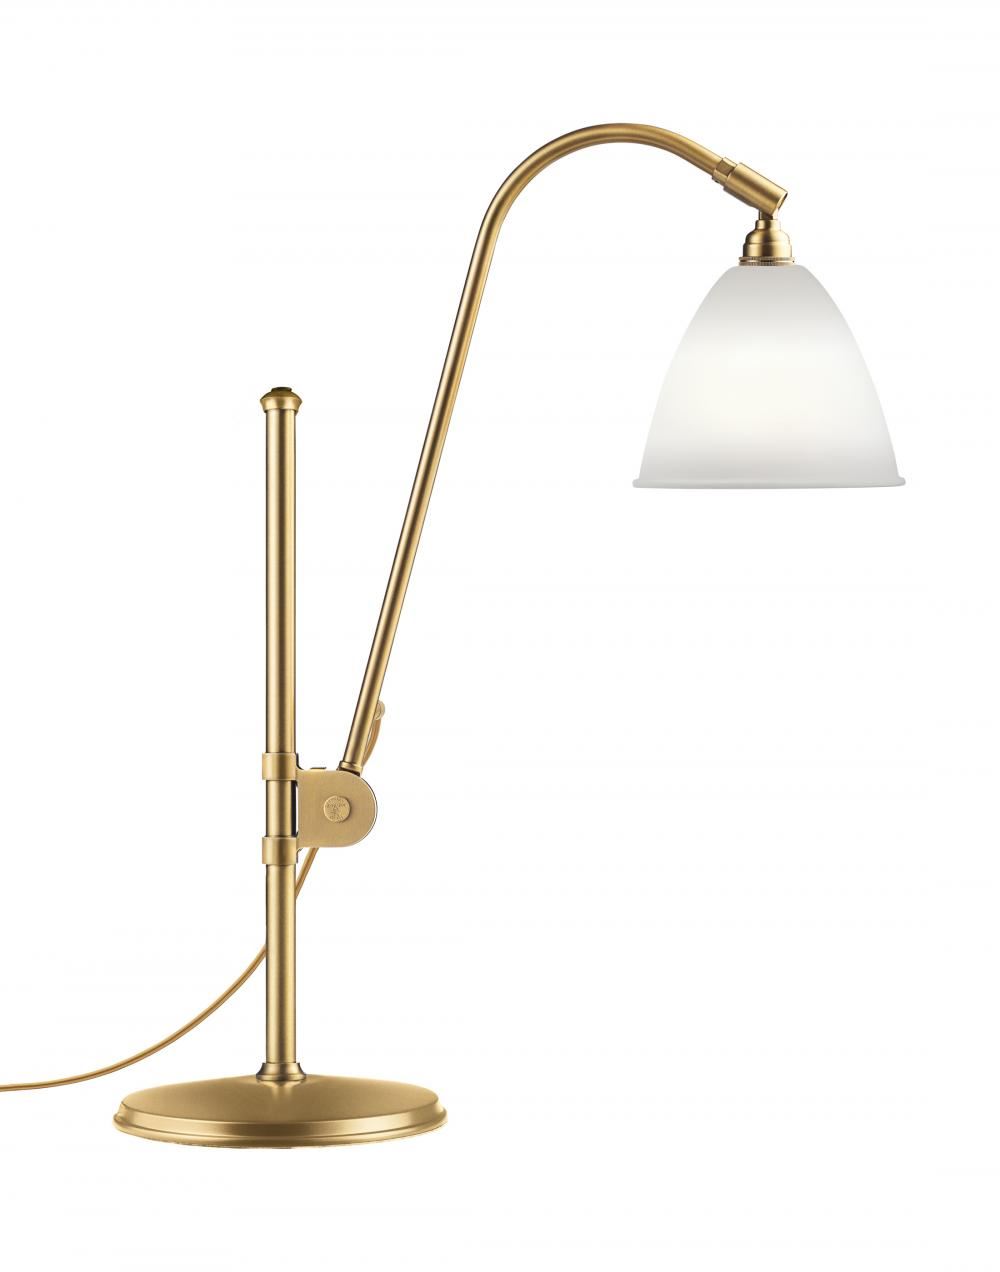 Bestlite Bl1 Table Lamp Brass Translucent Bone China